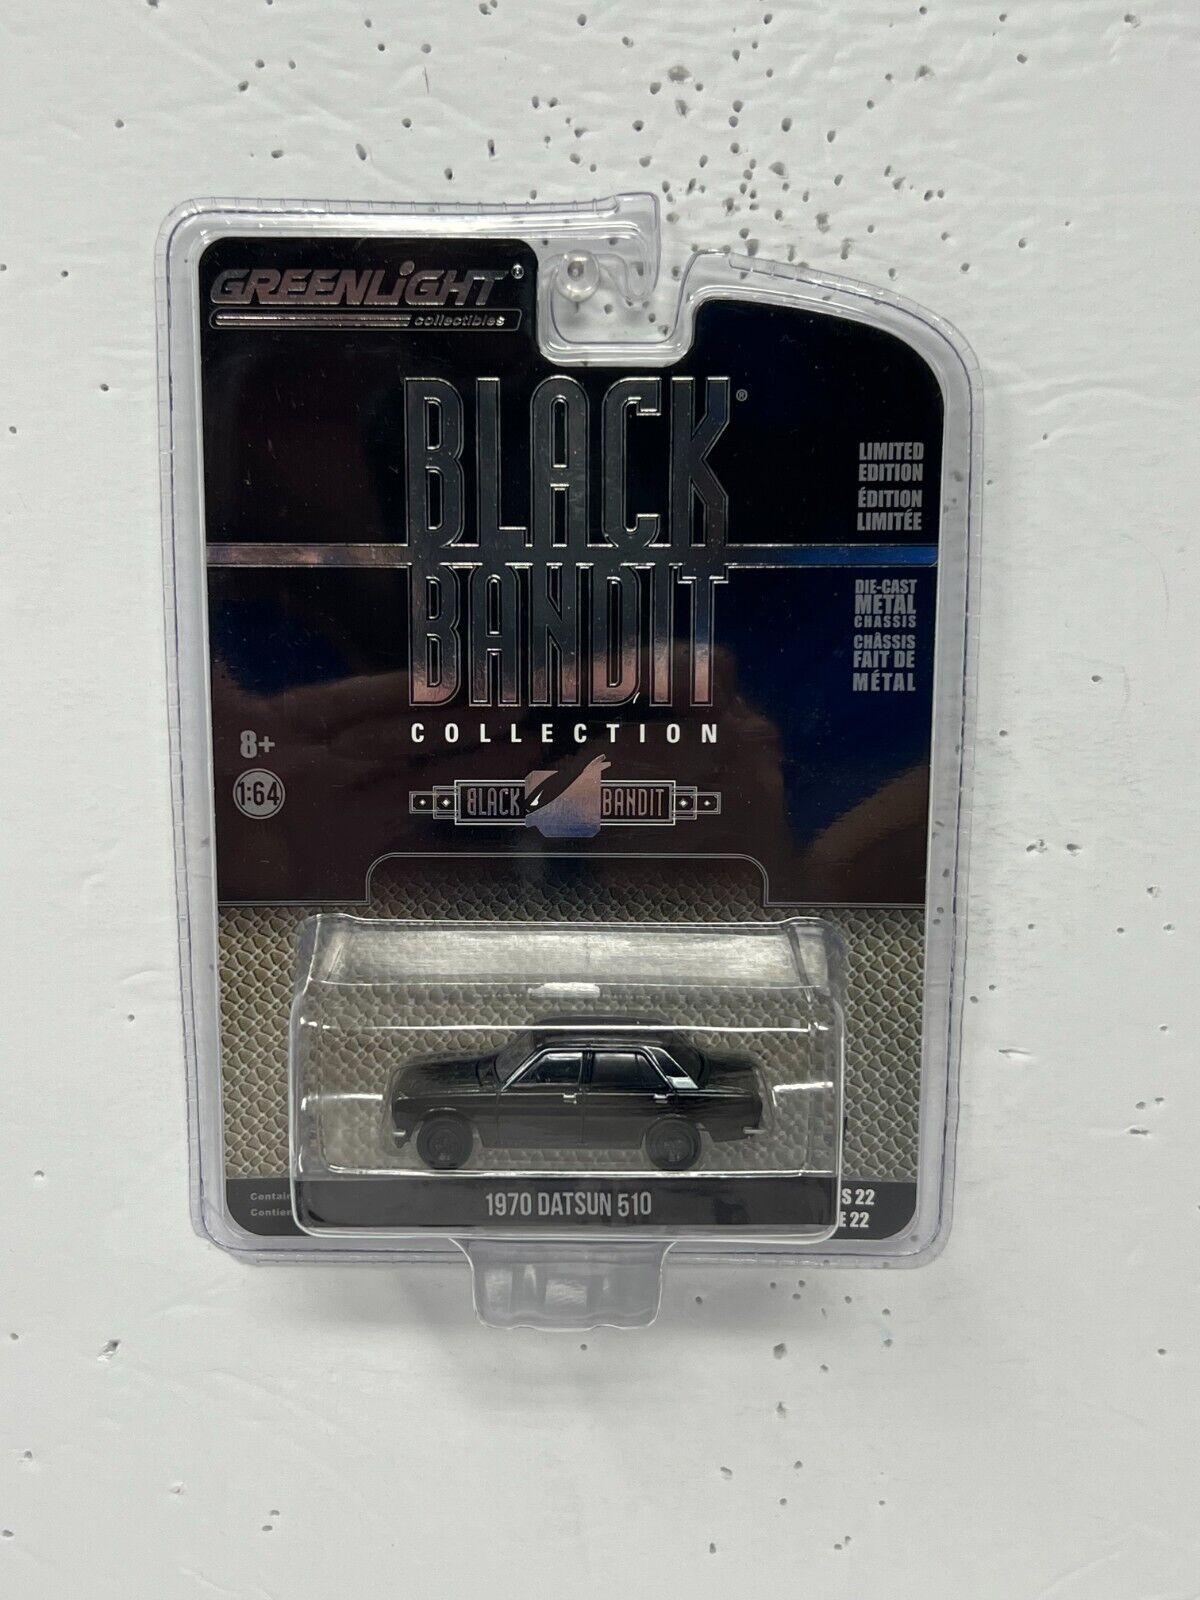 Greenlight Black Bandit 1970 Datsun 510 1:64 Diecast